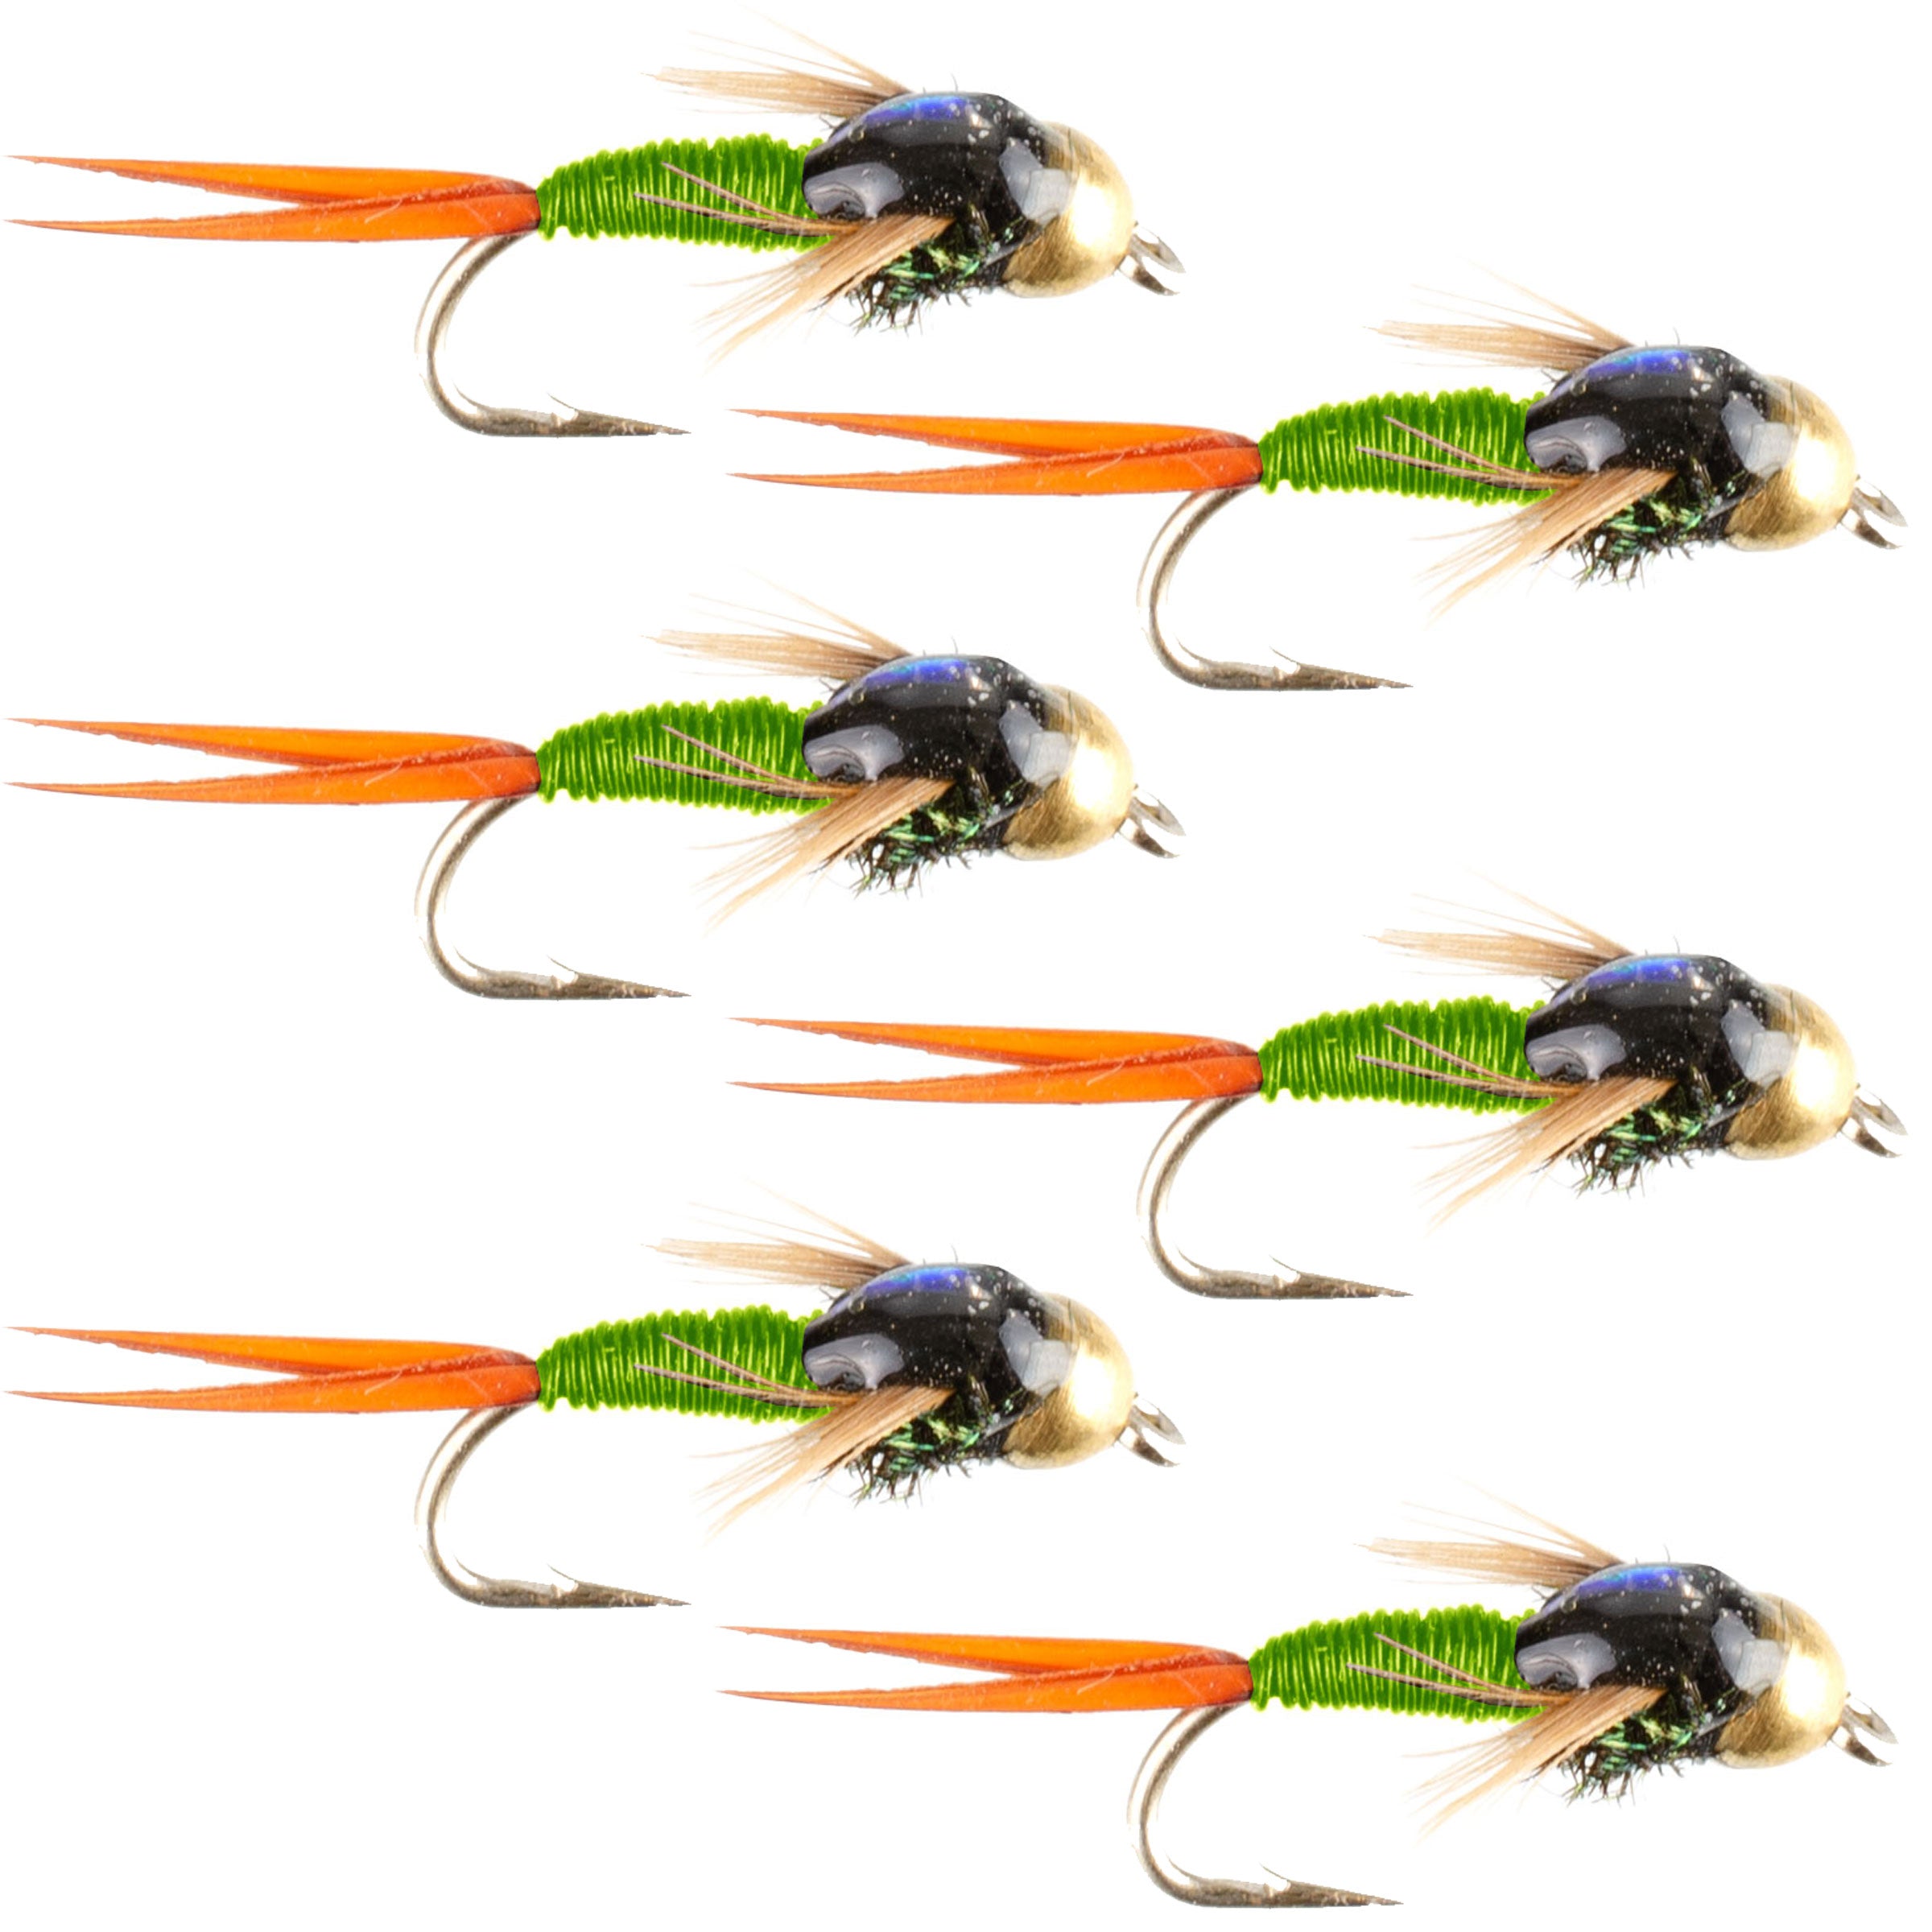 Bead Head Chartreuse Copper John Nymph Fly Fishing Flies - Set of 6 Flies Hook Size 14